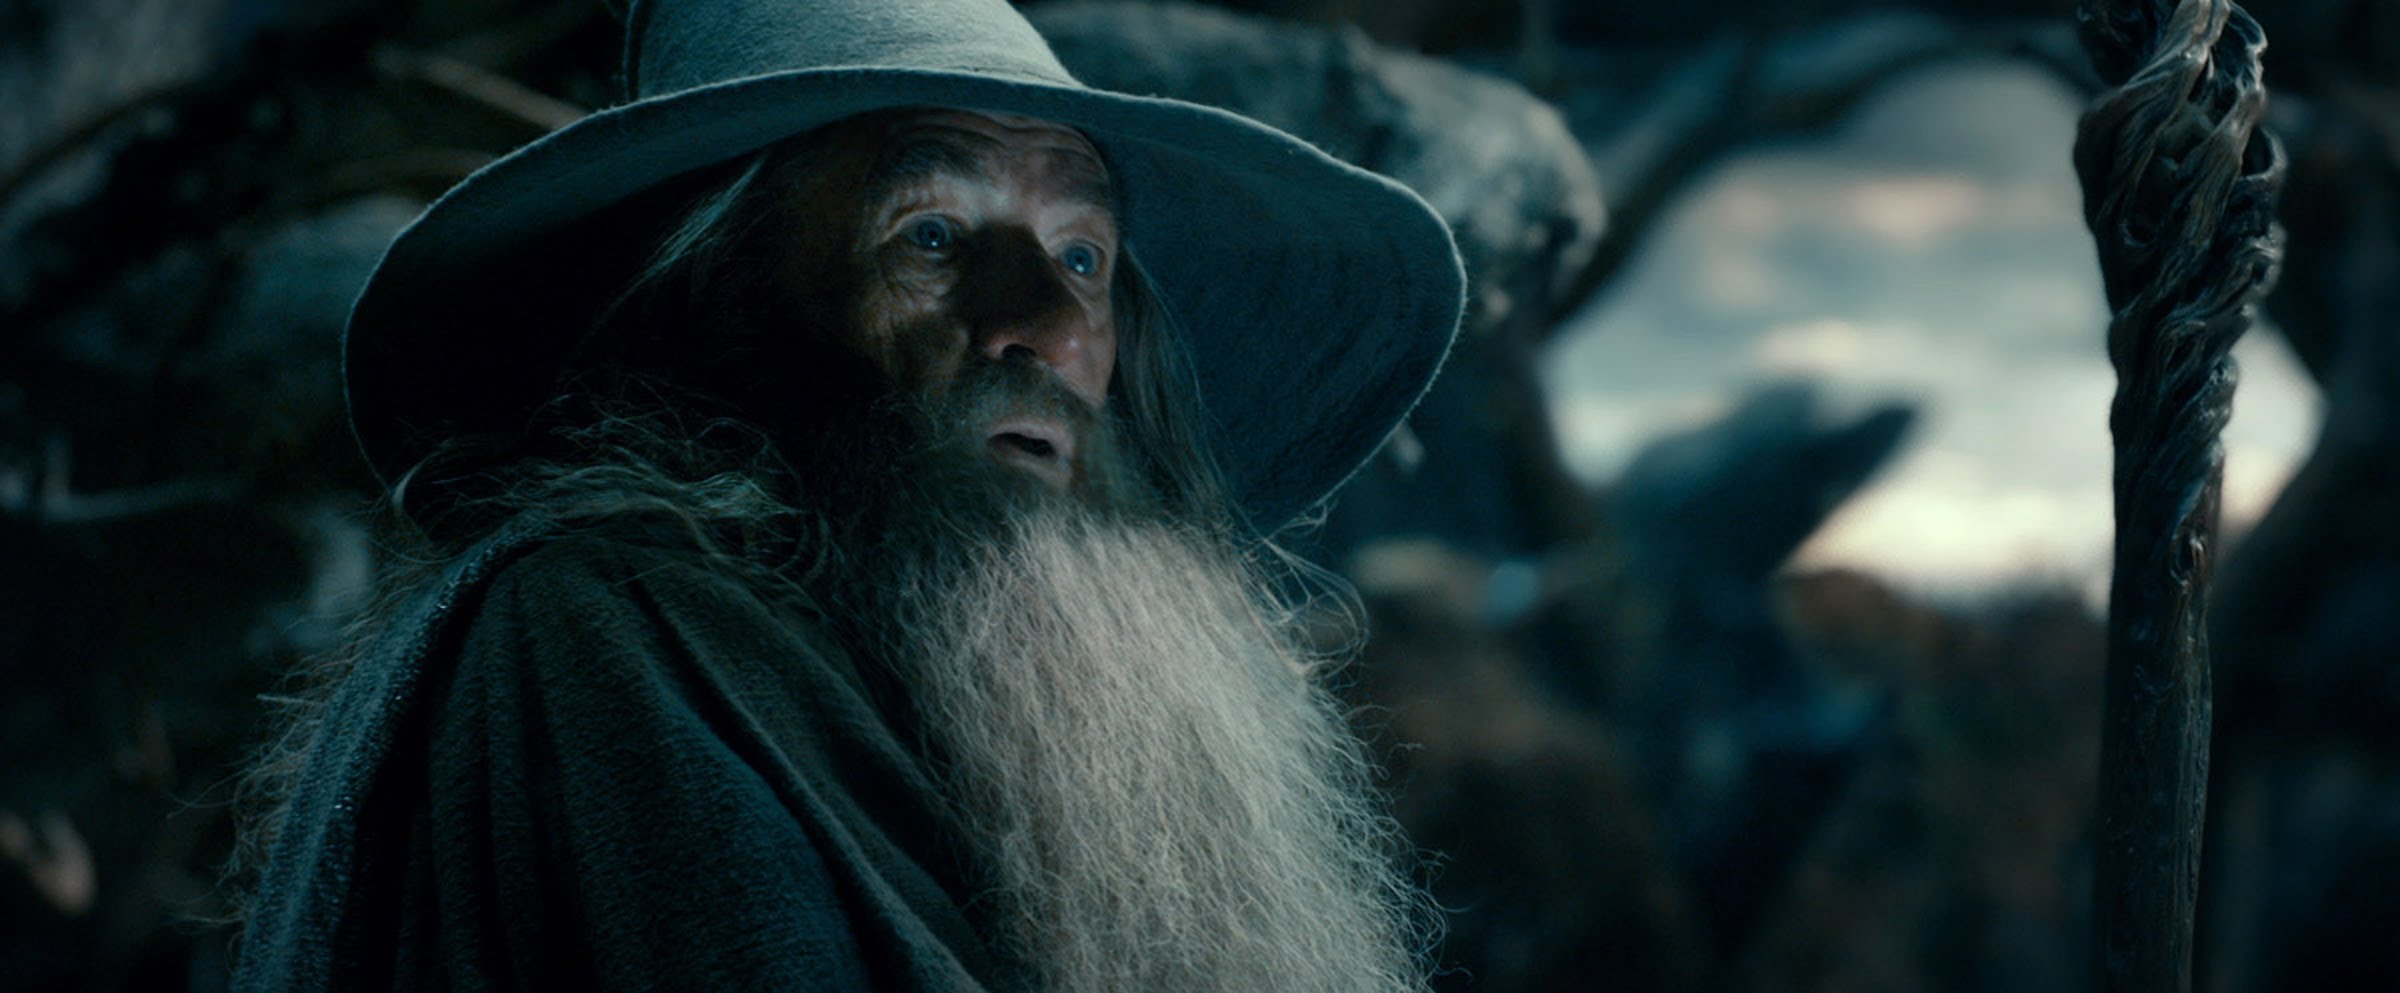 The Hobbit: The Desolation of Smaug or the Desolation of Smaug - Trailer HD